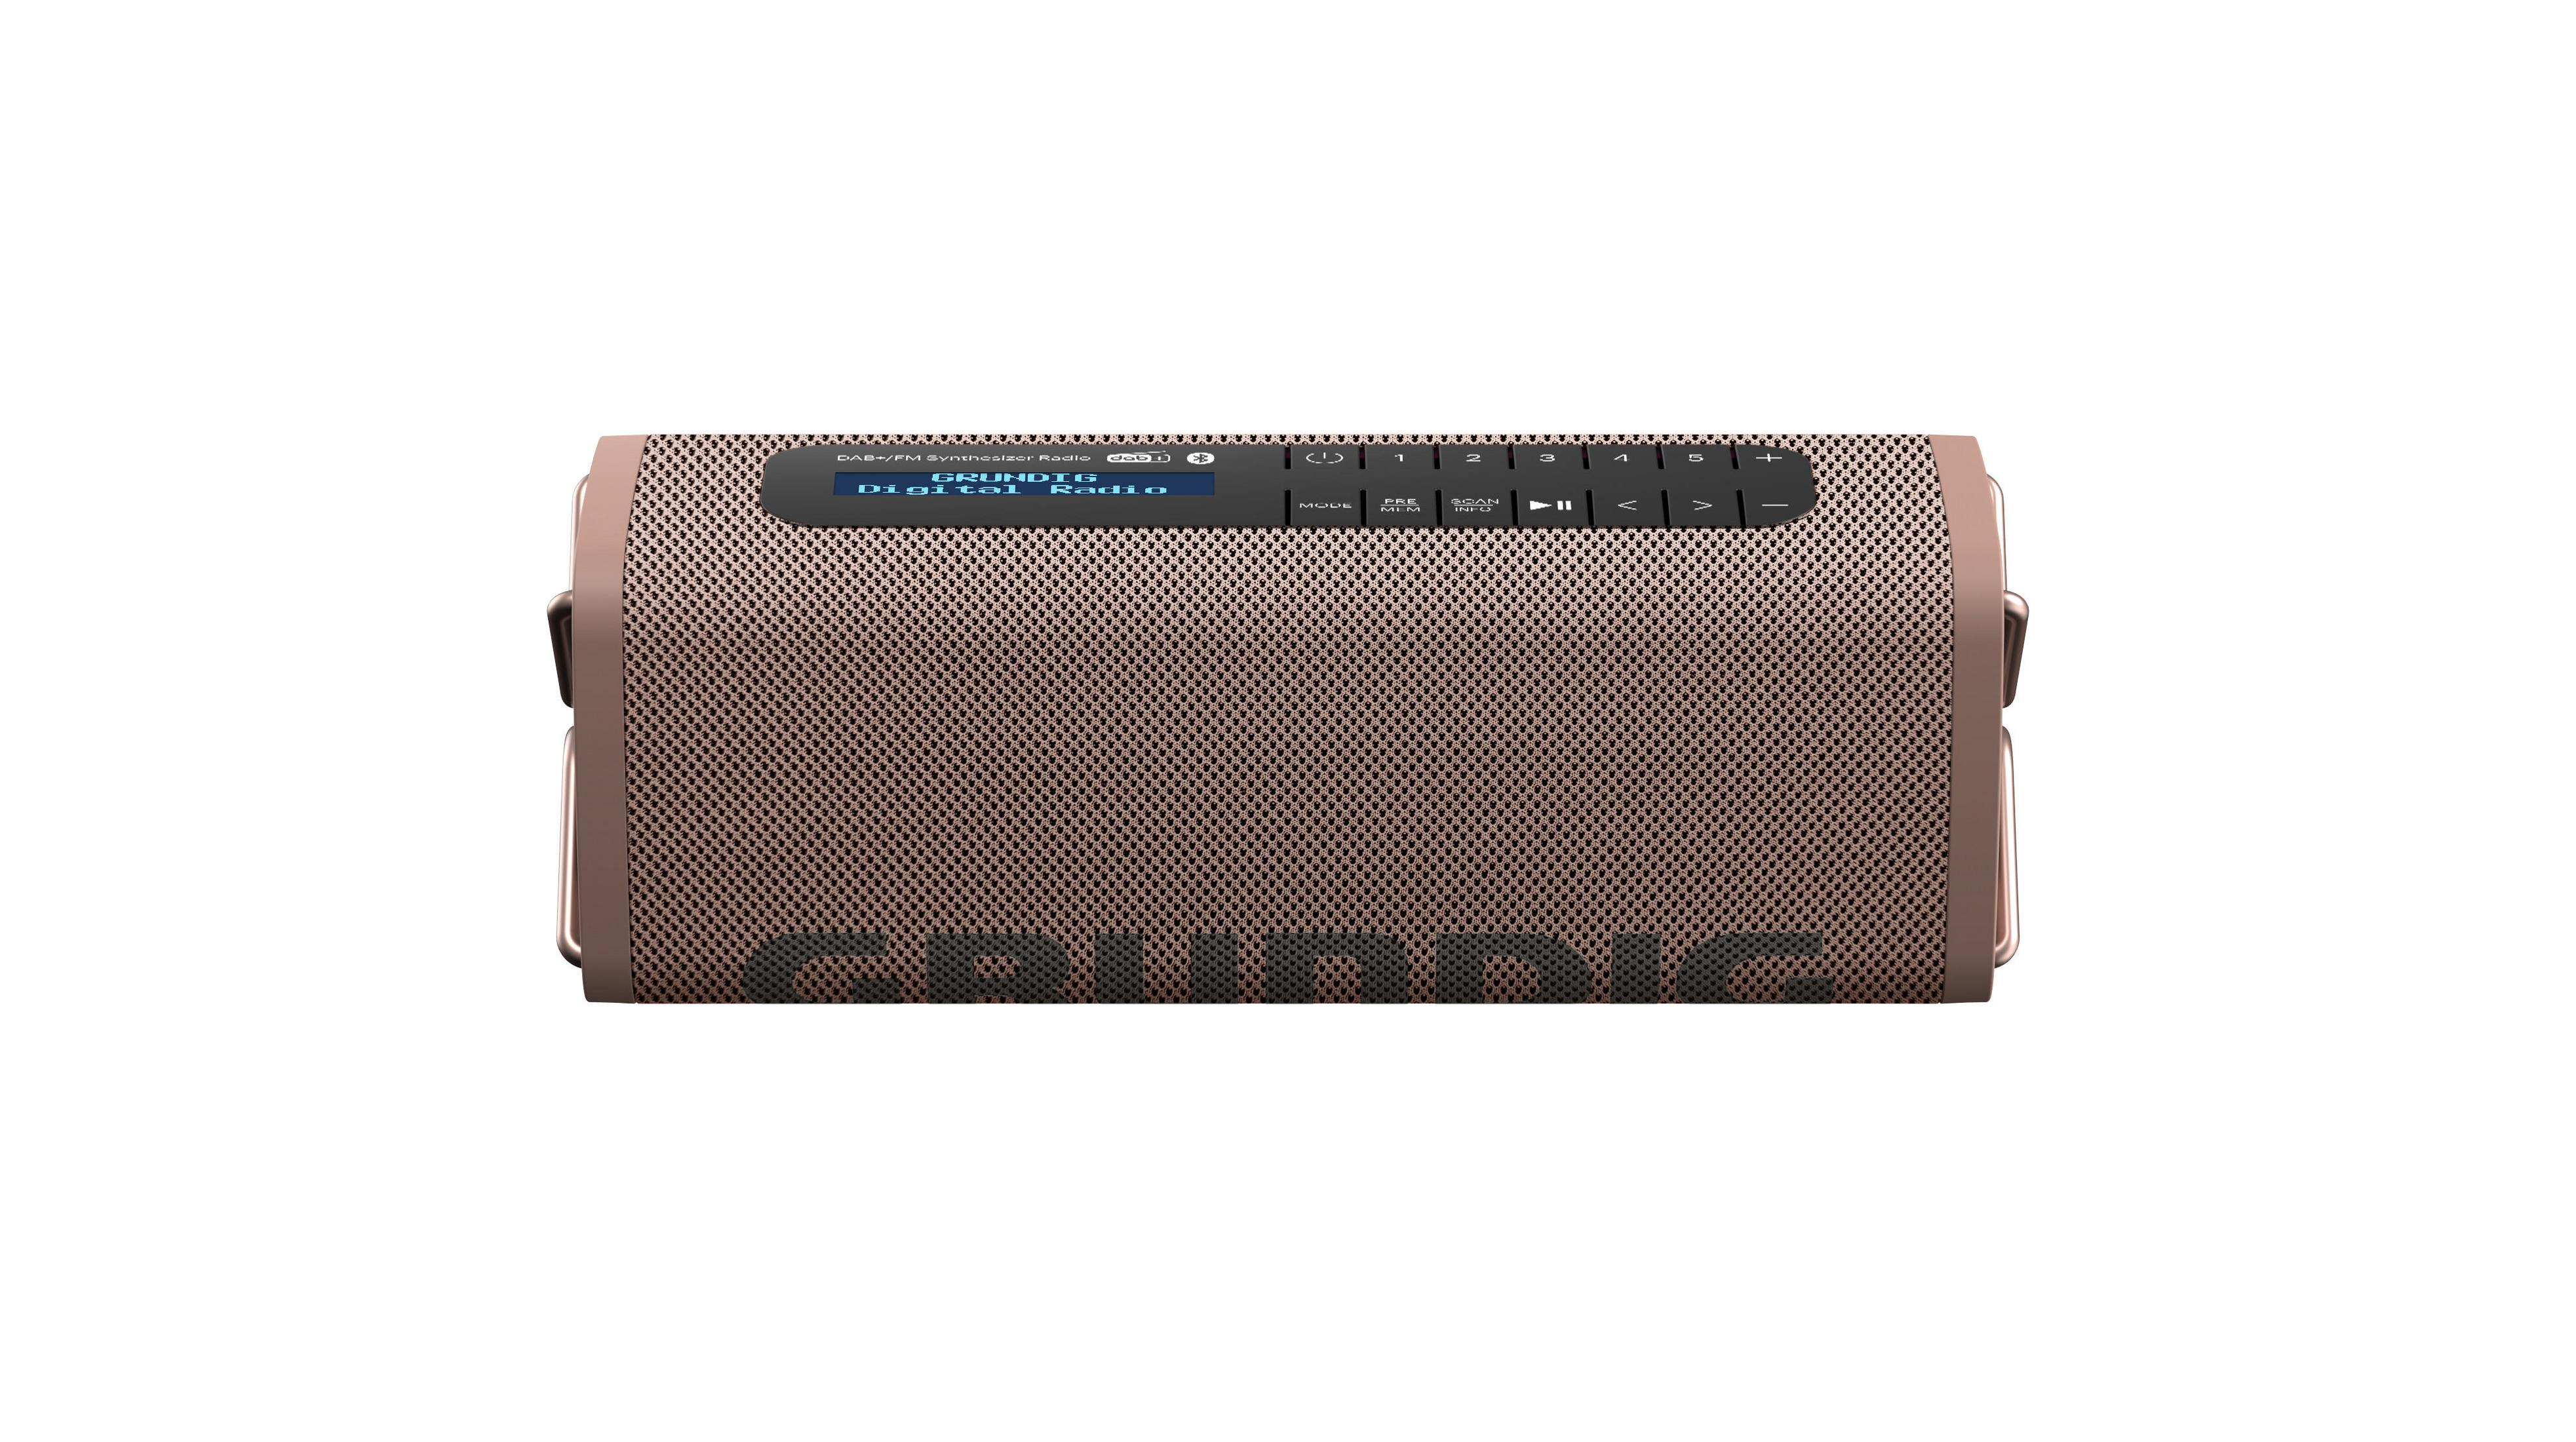 GRUNDIG GBT Braun 7766 GLR Bluetooth BAND COFFEE Lautsprecher